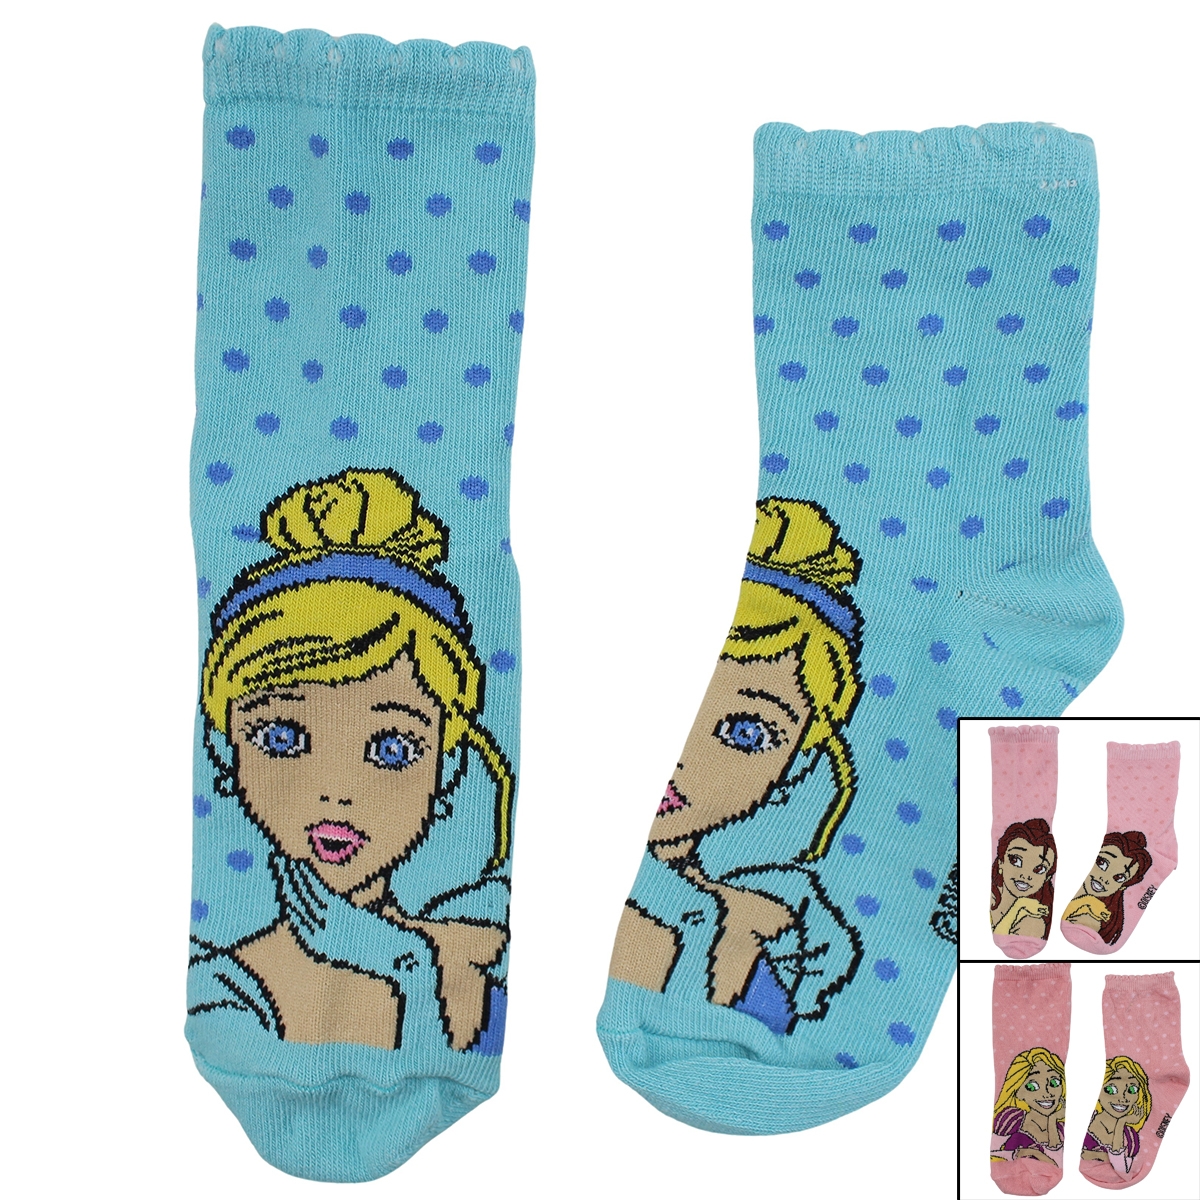 Princesse Pair of socks